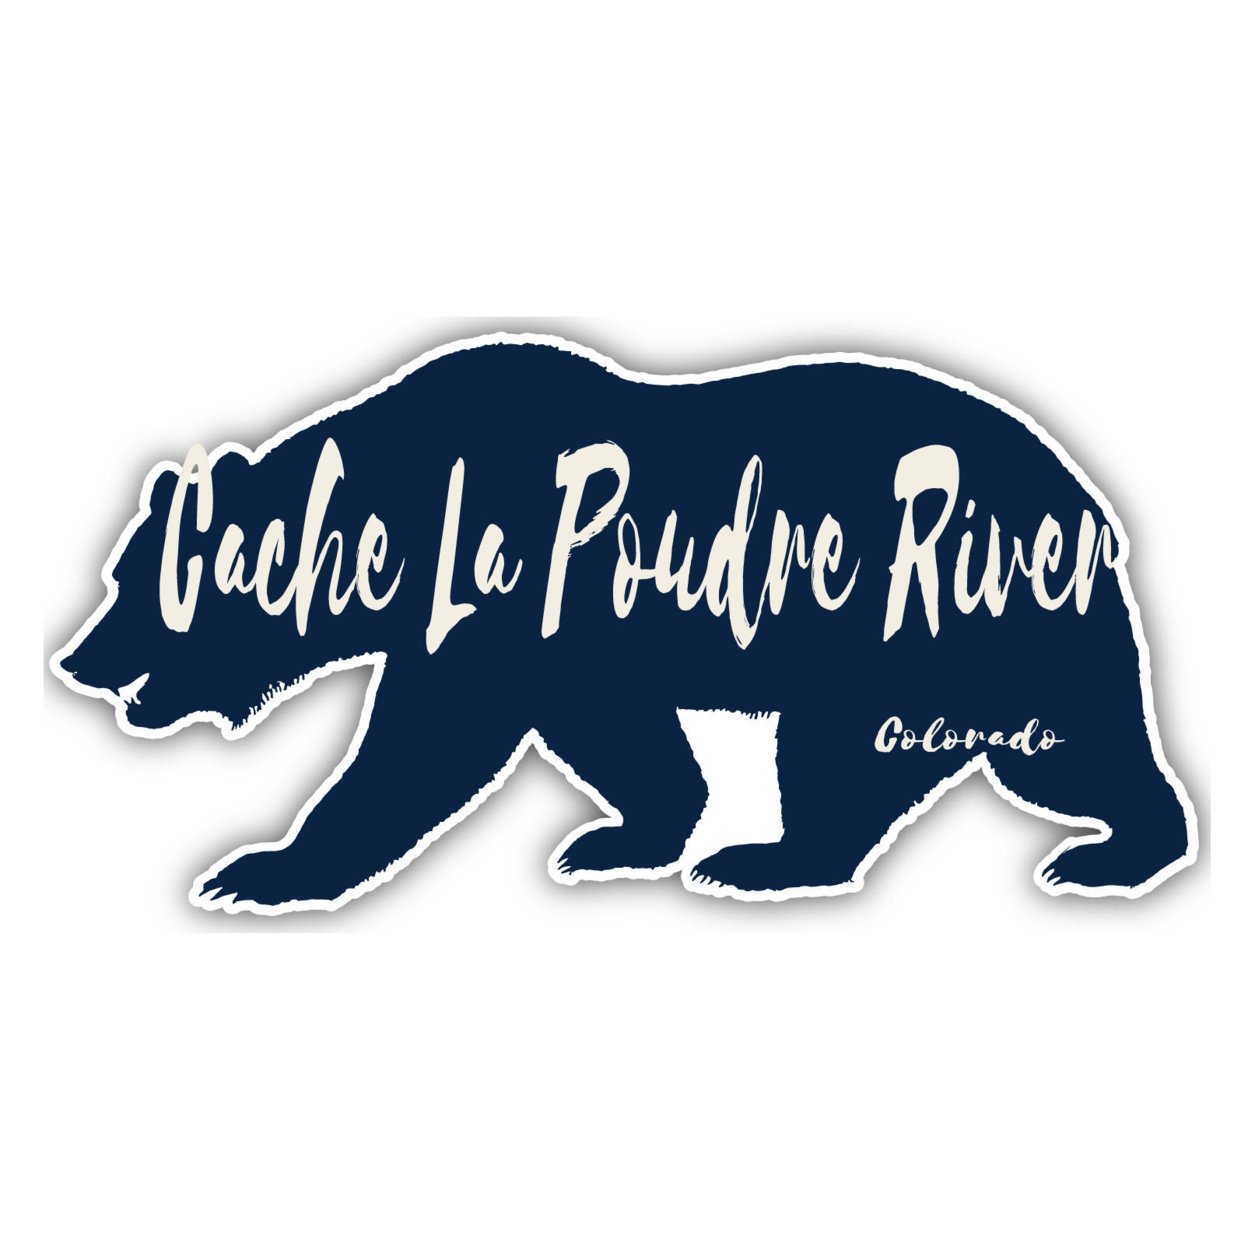 Cache La Poudre River Colorado Souvenir Decorative Stickers (Choose Theme And Size) - 4-Pack, 10-Inch, Camp Life